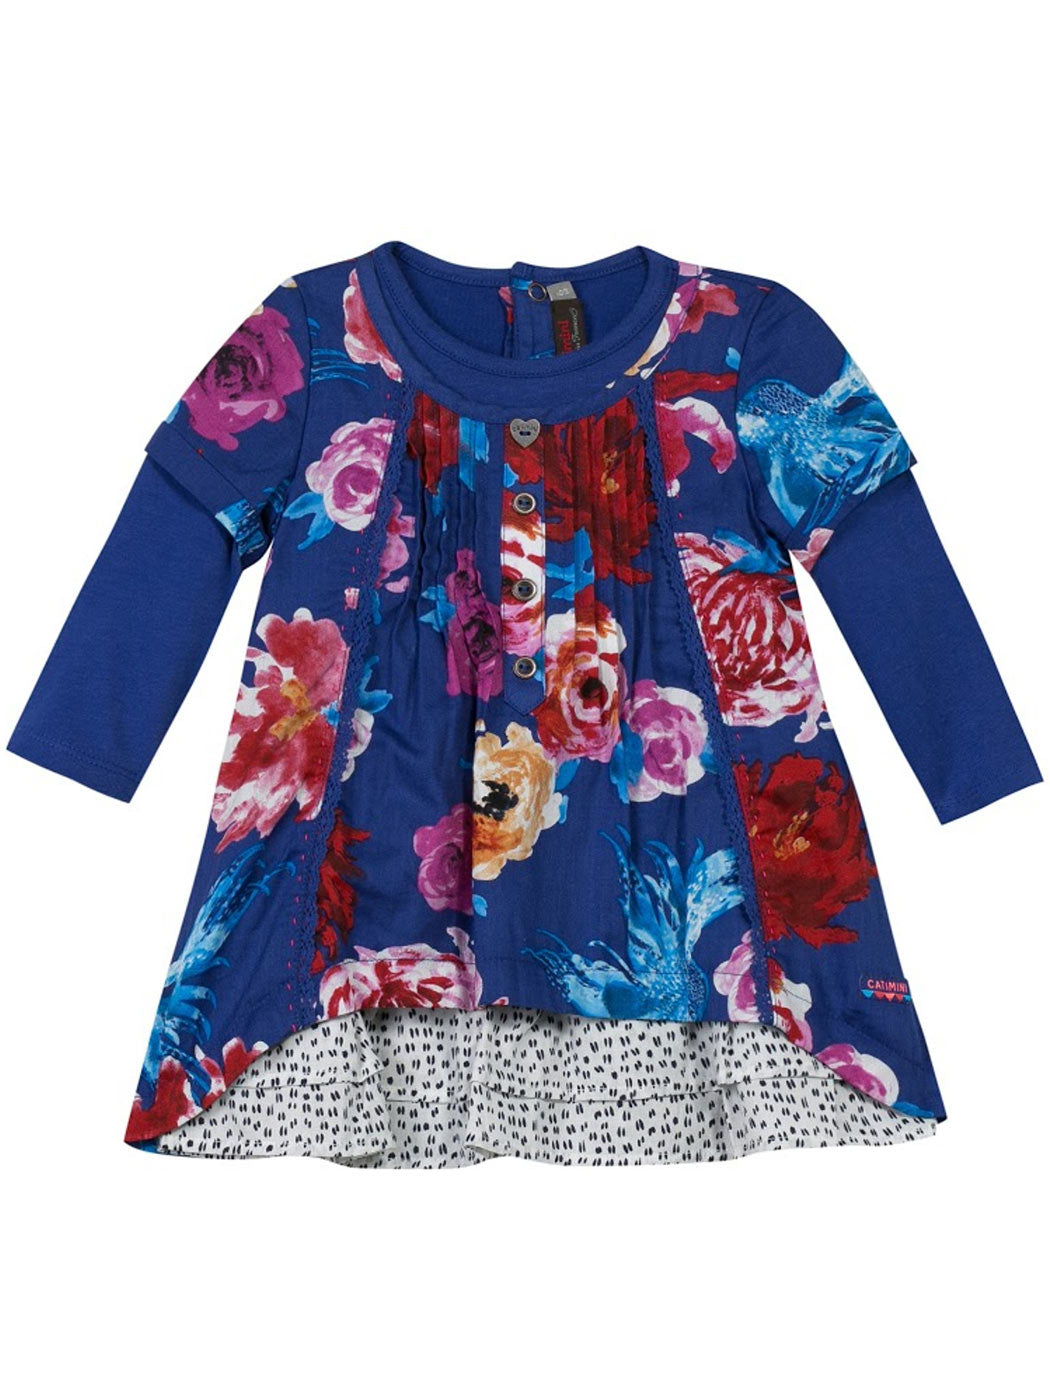 Baby Girl's cotton dress-CG30023-45-Blue